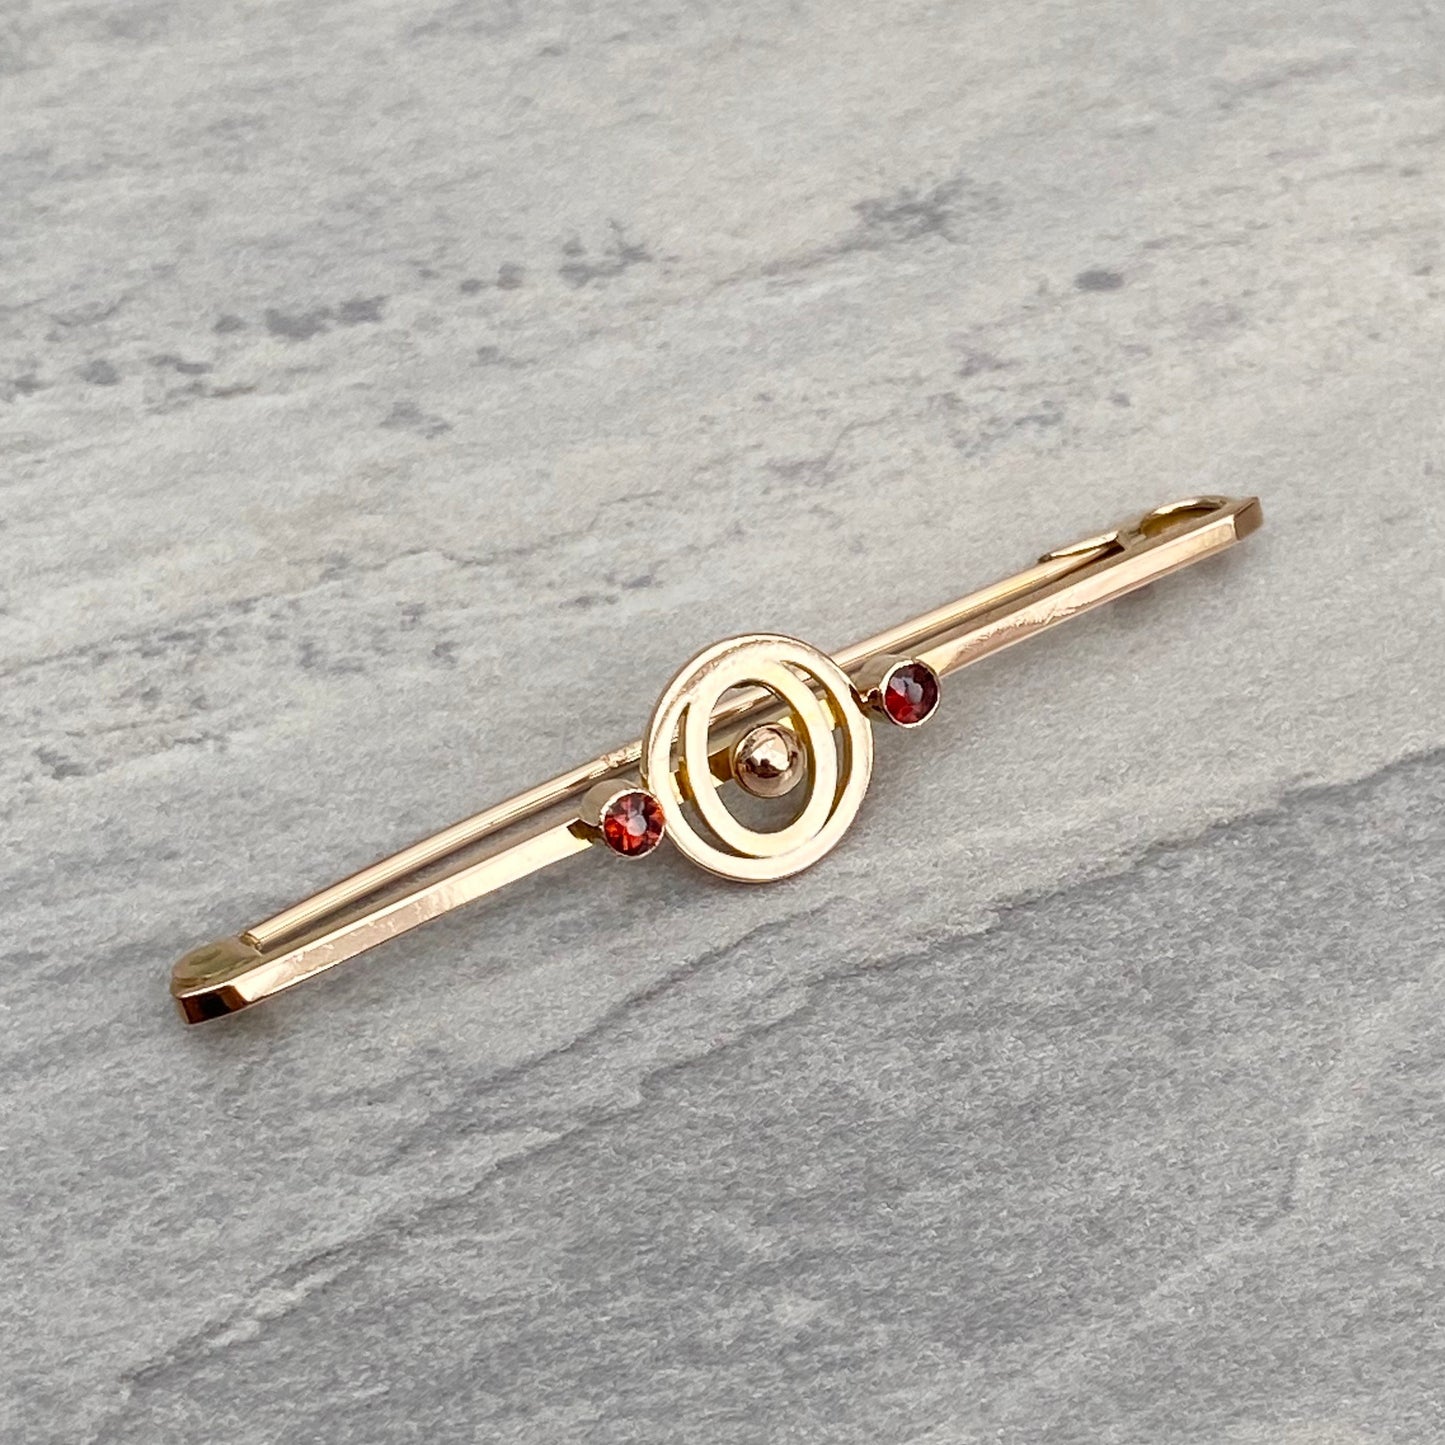 Vintage 9ct rose gold circle detail garnet brooch